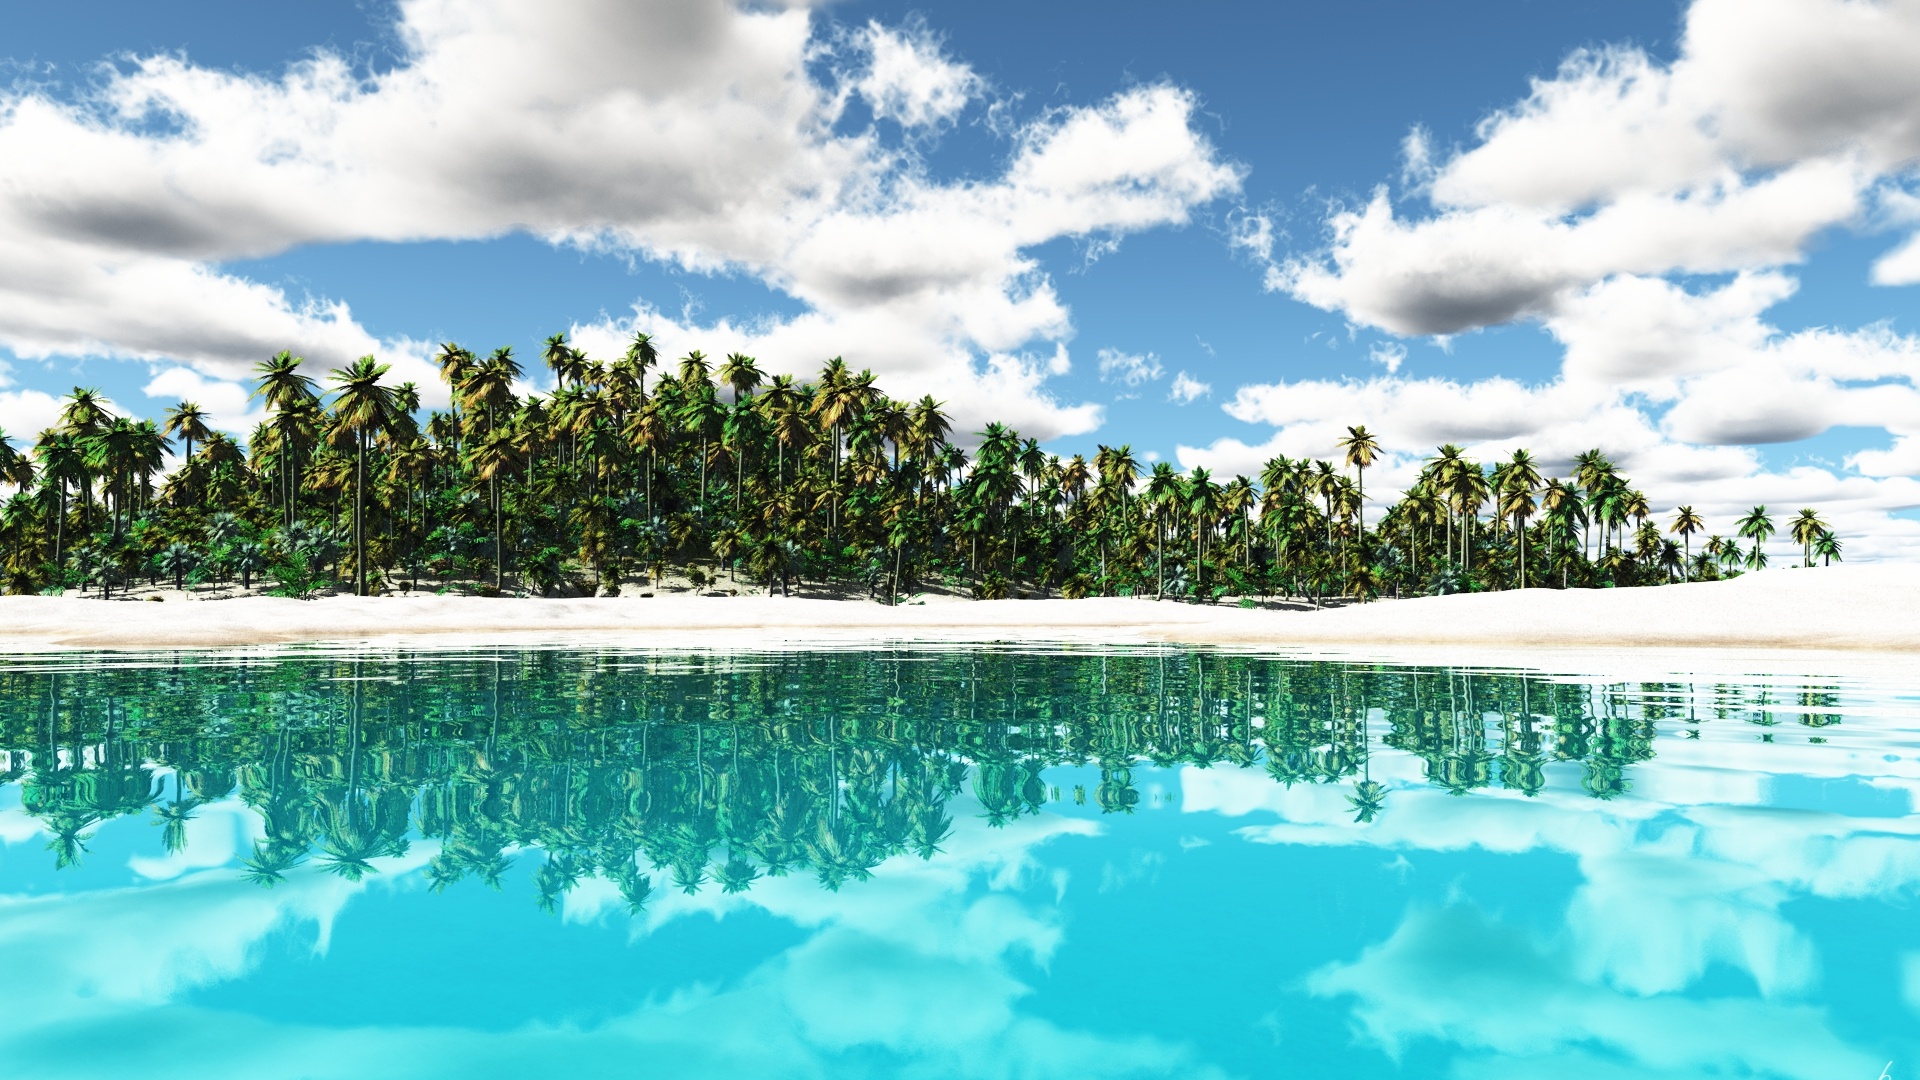 Tropical Island Desktop Backgrounds